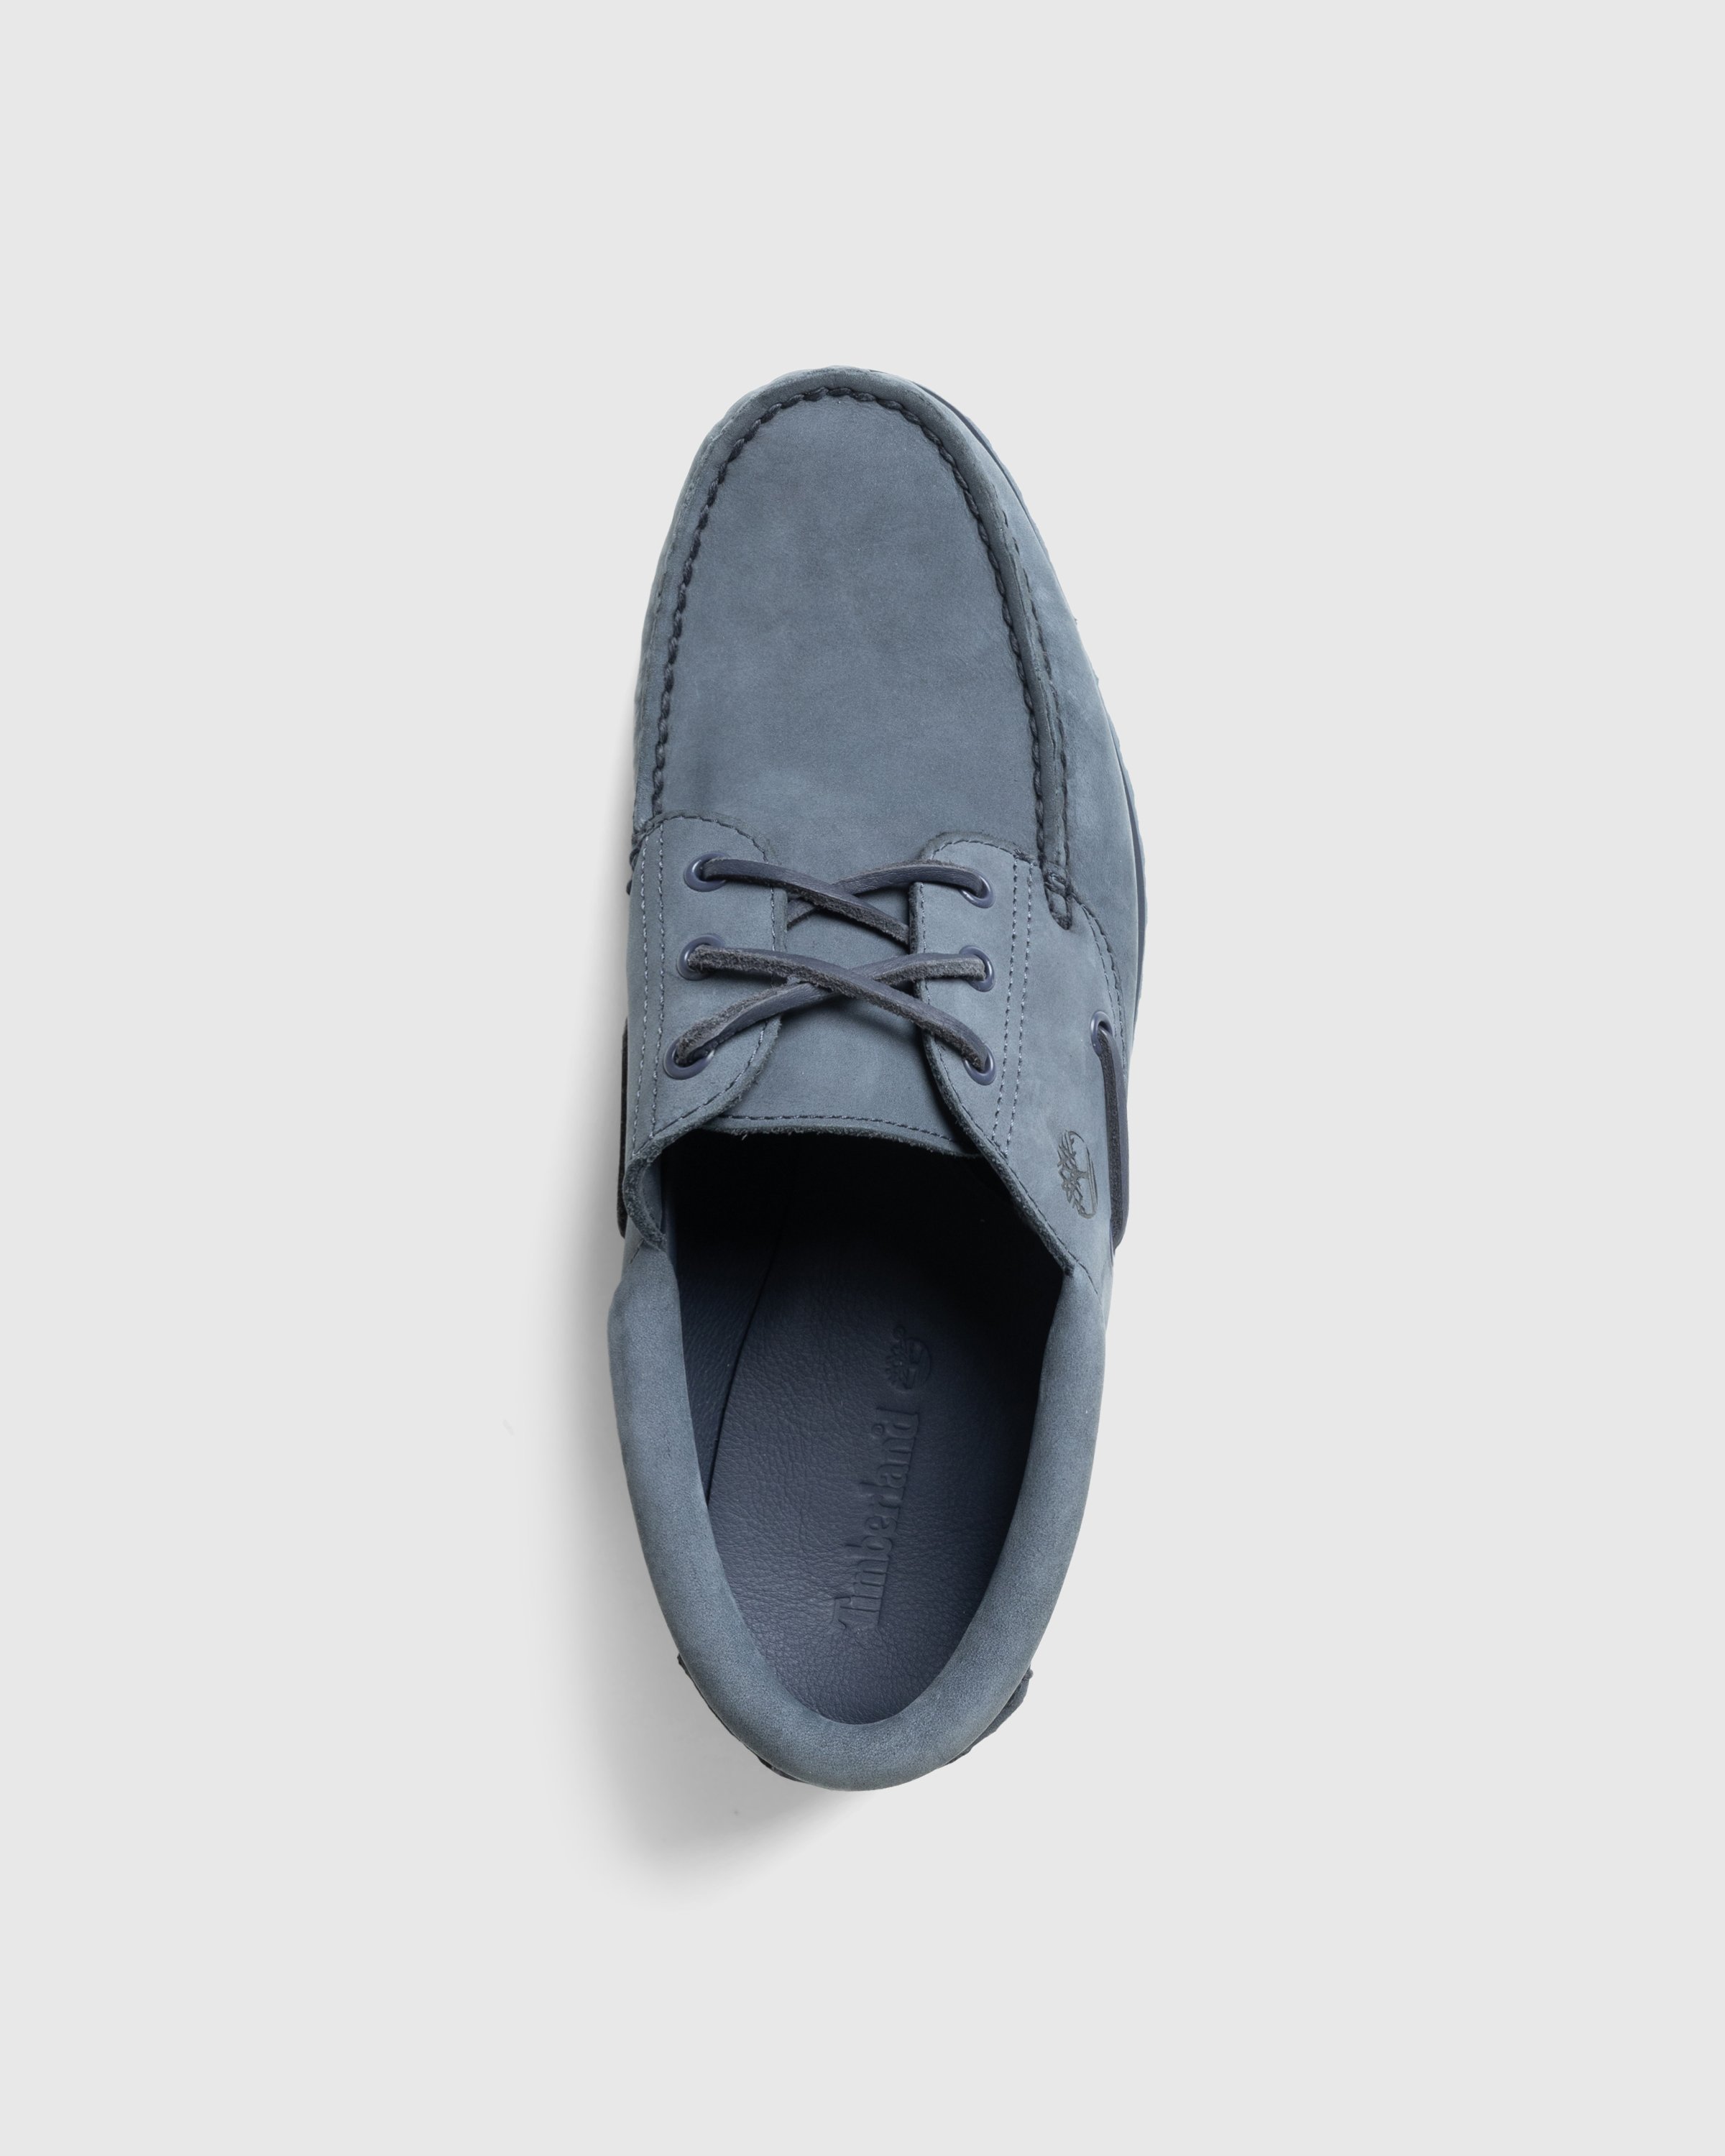 Timberland - Timberland Authentic BOAT SHOE DARK BLUE NUBUCK - Footwear - Blue - Image 5